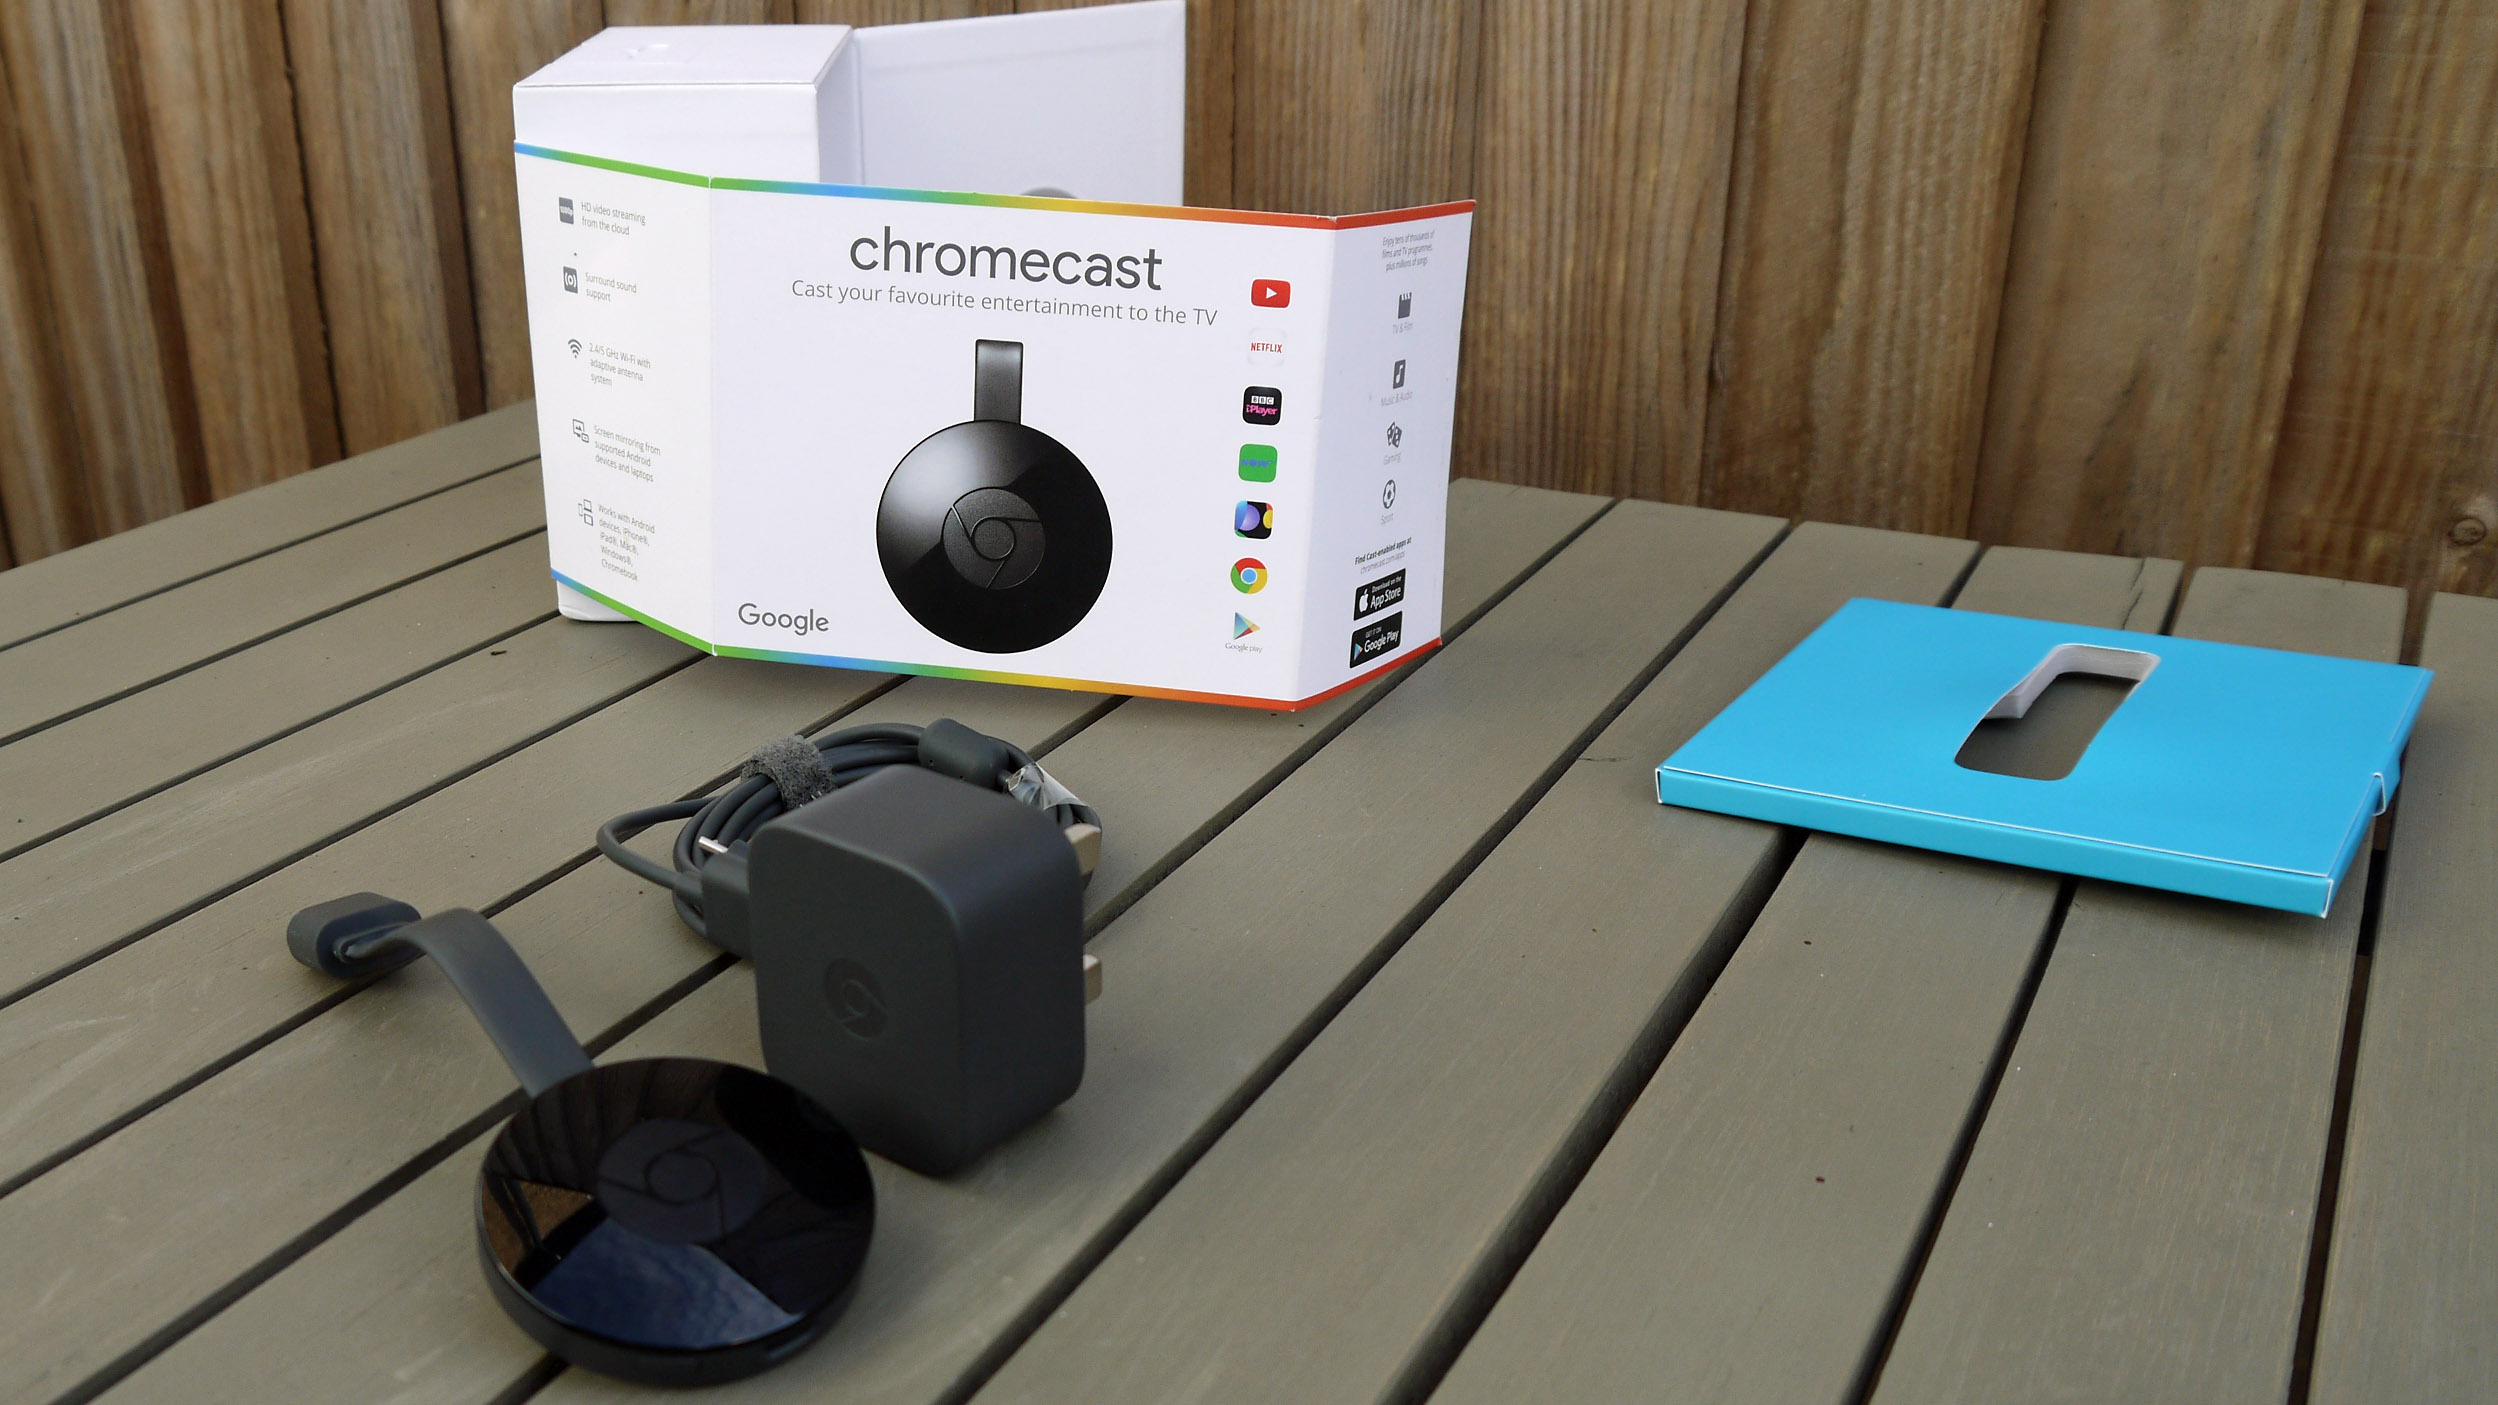 google chromecast setup with mobile hotspot